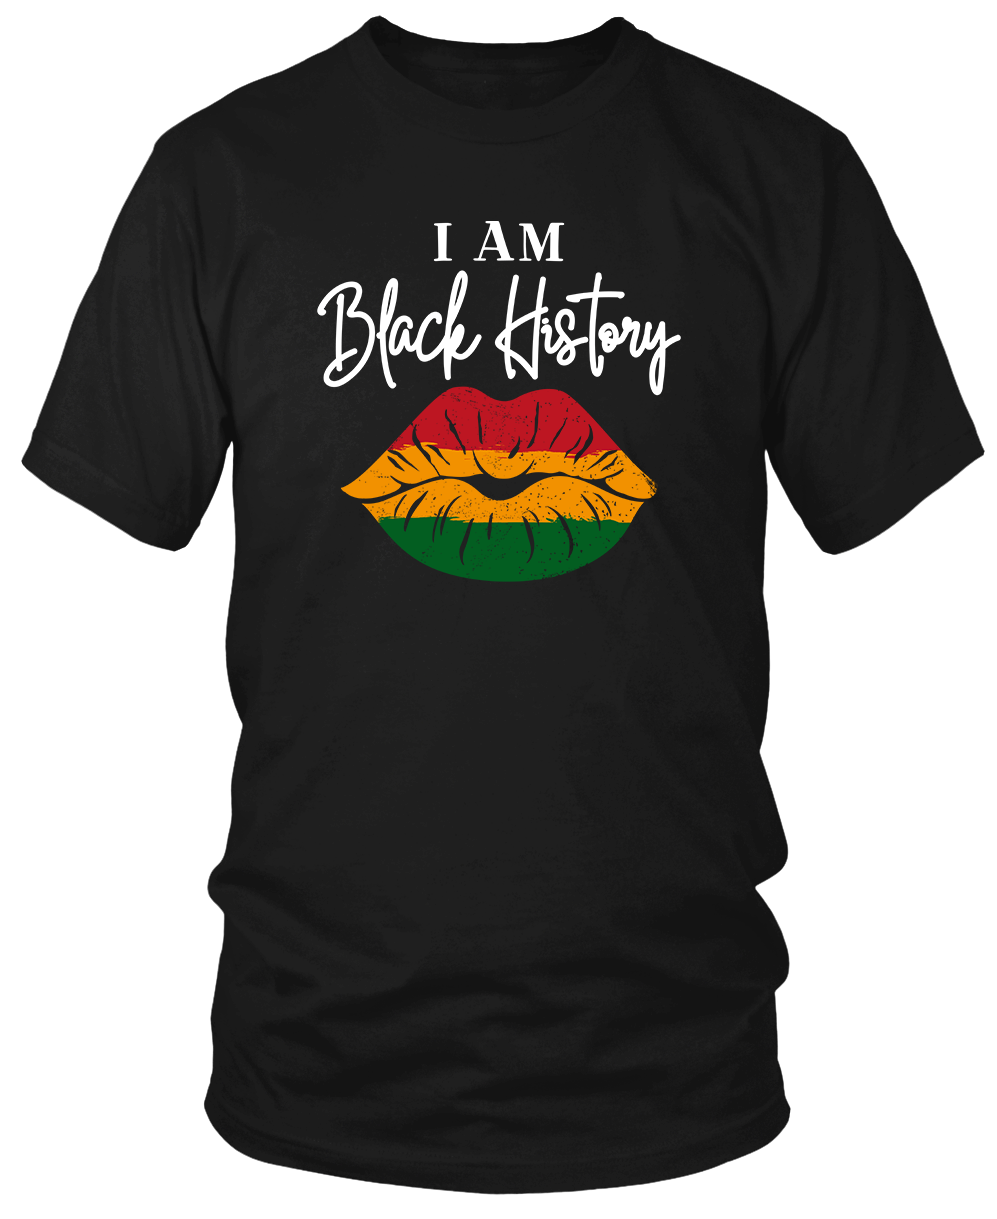 I AM BLACK HISTORY LIPS T-SHIRTS